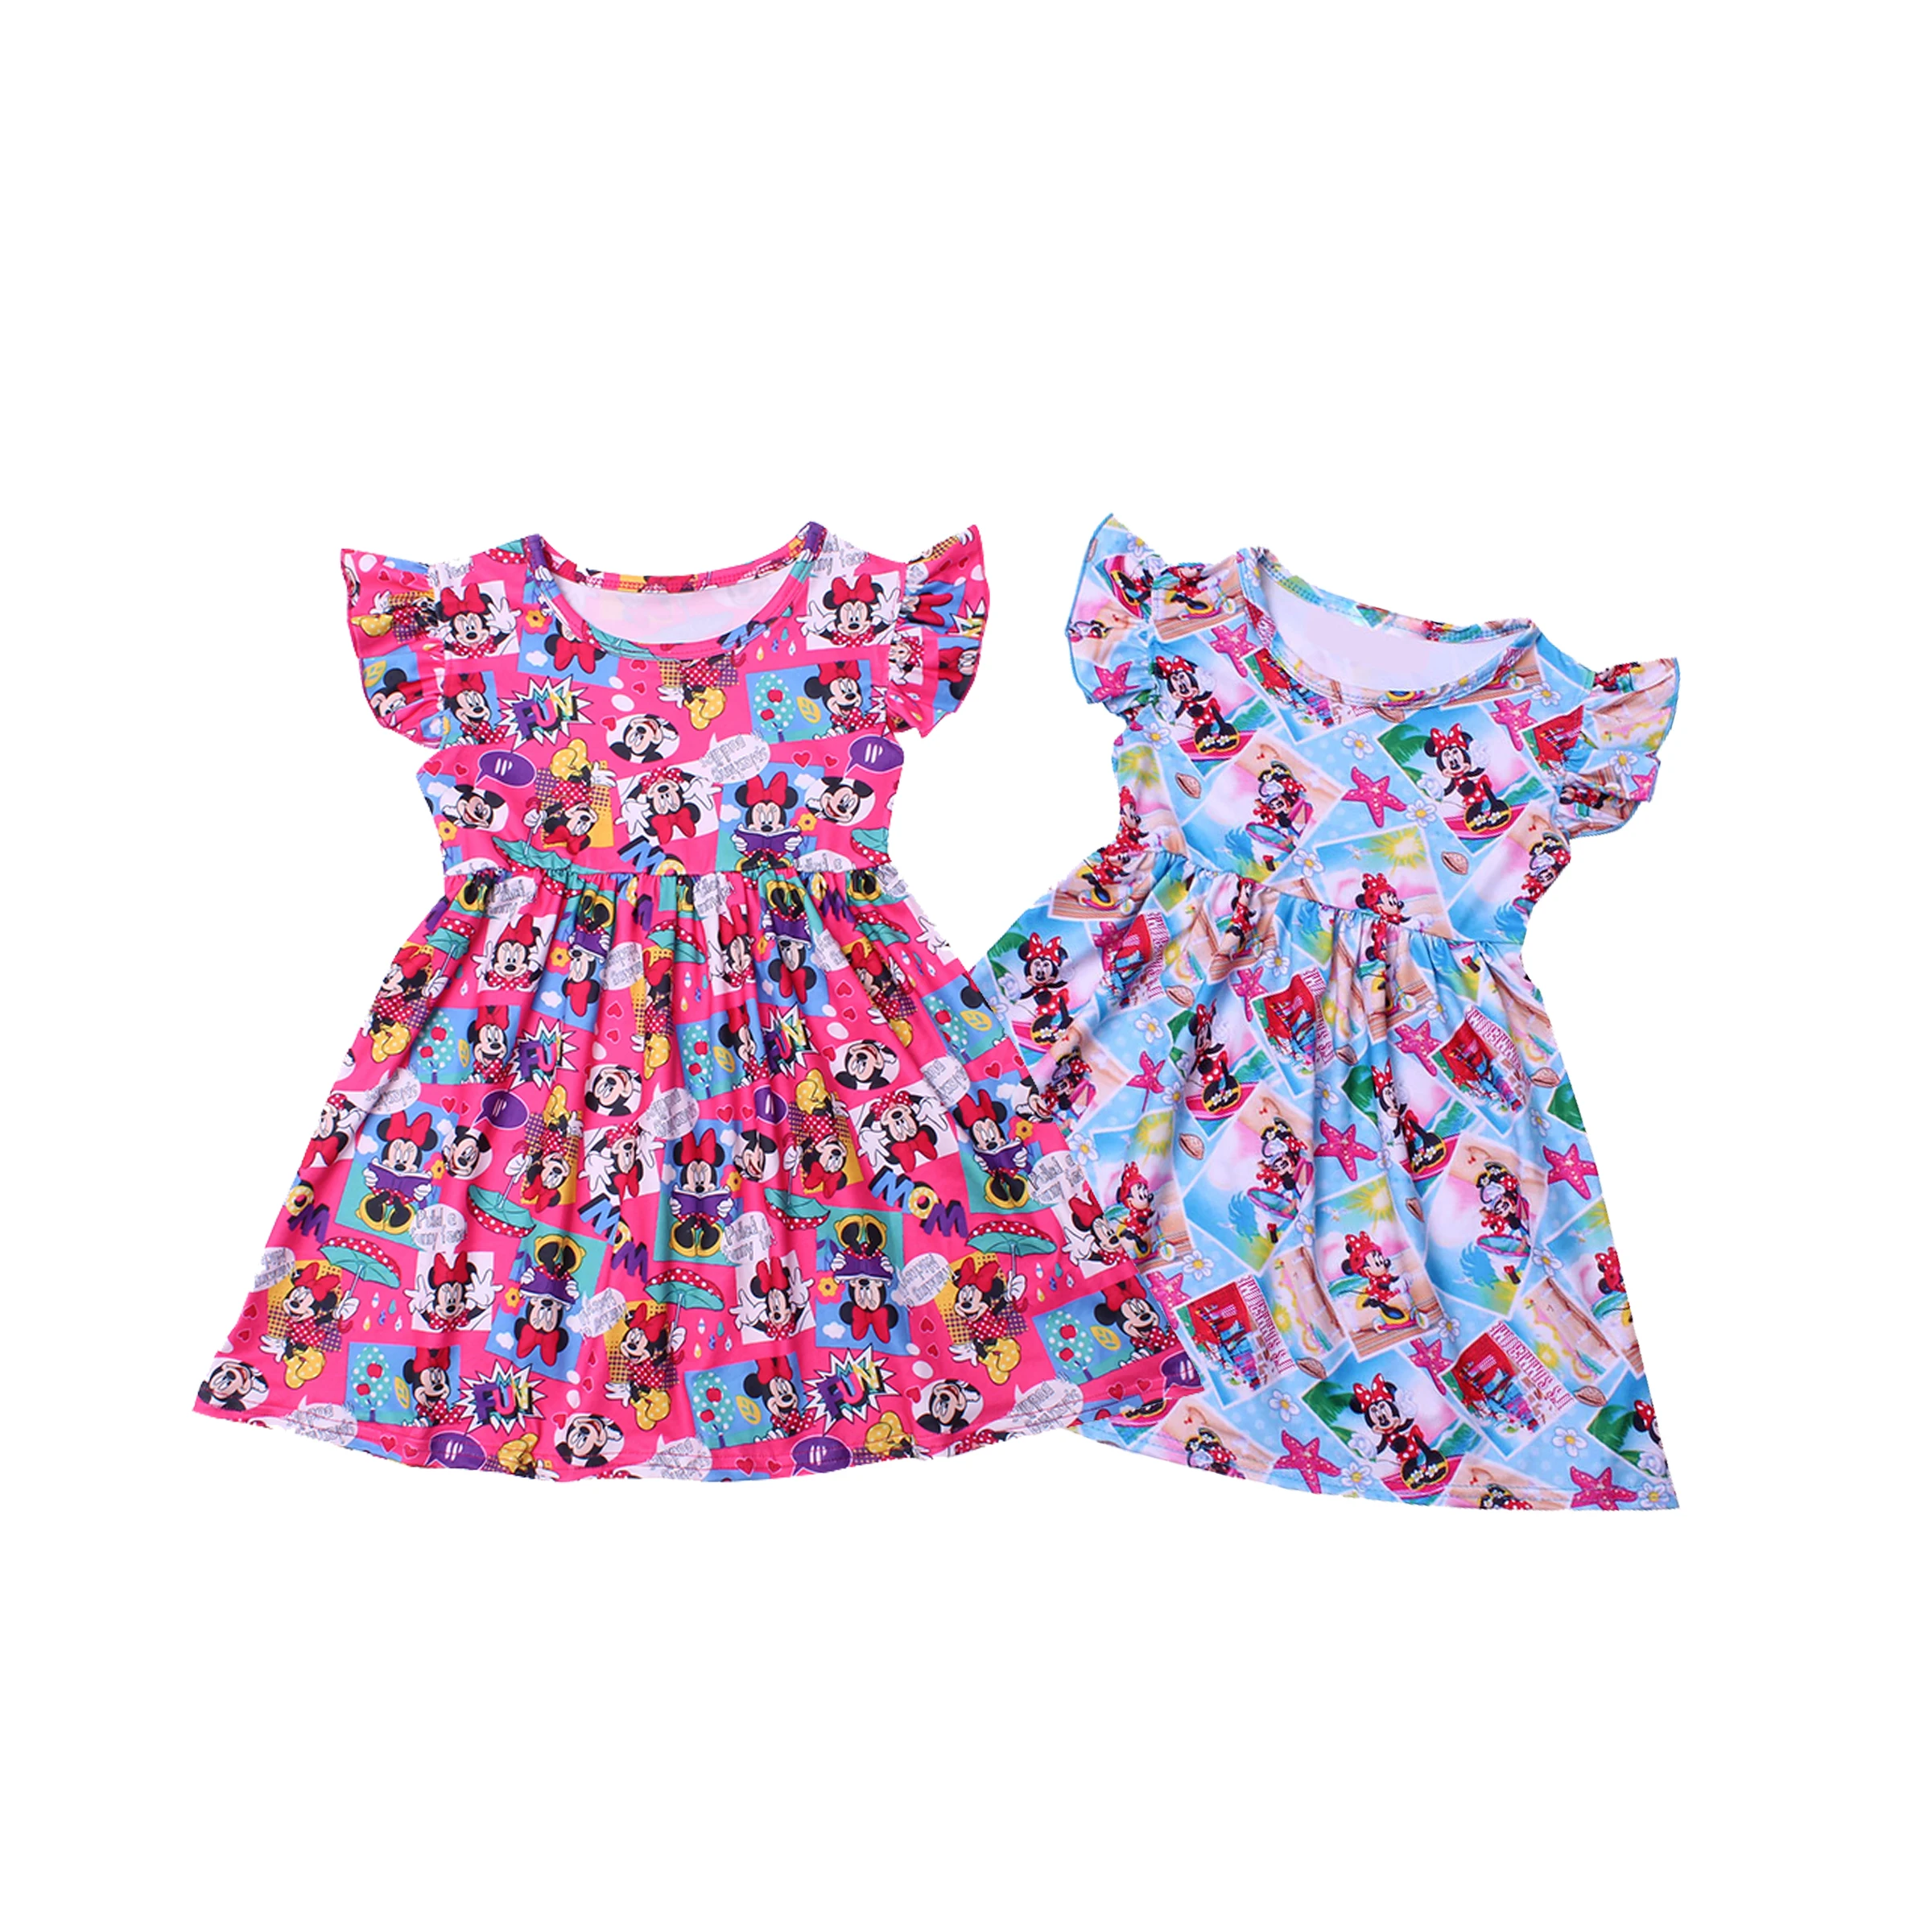 

New Children Girls Mouse Dress Summer Kids Sleeveless Cartoon Boutique Dress Adorable Clothes Soft Milksilk 12M to 7T Available